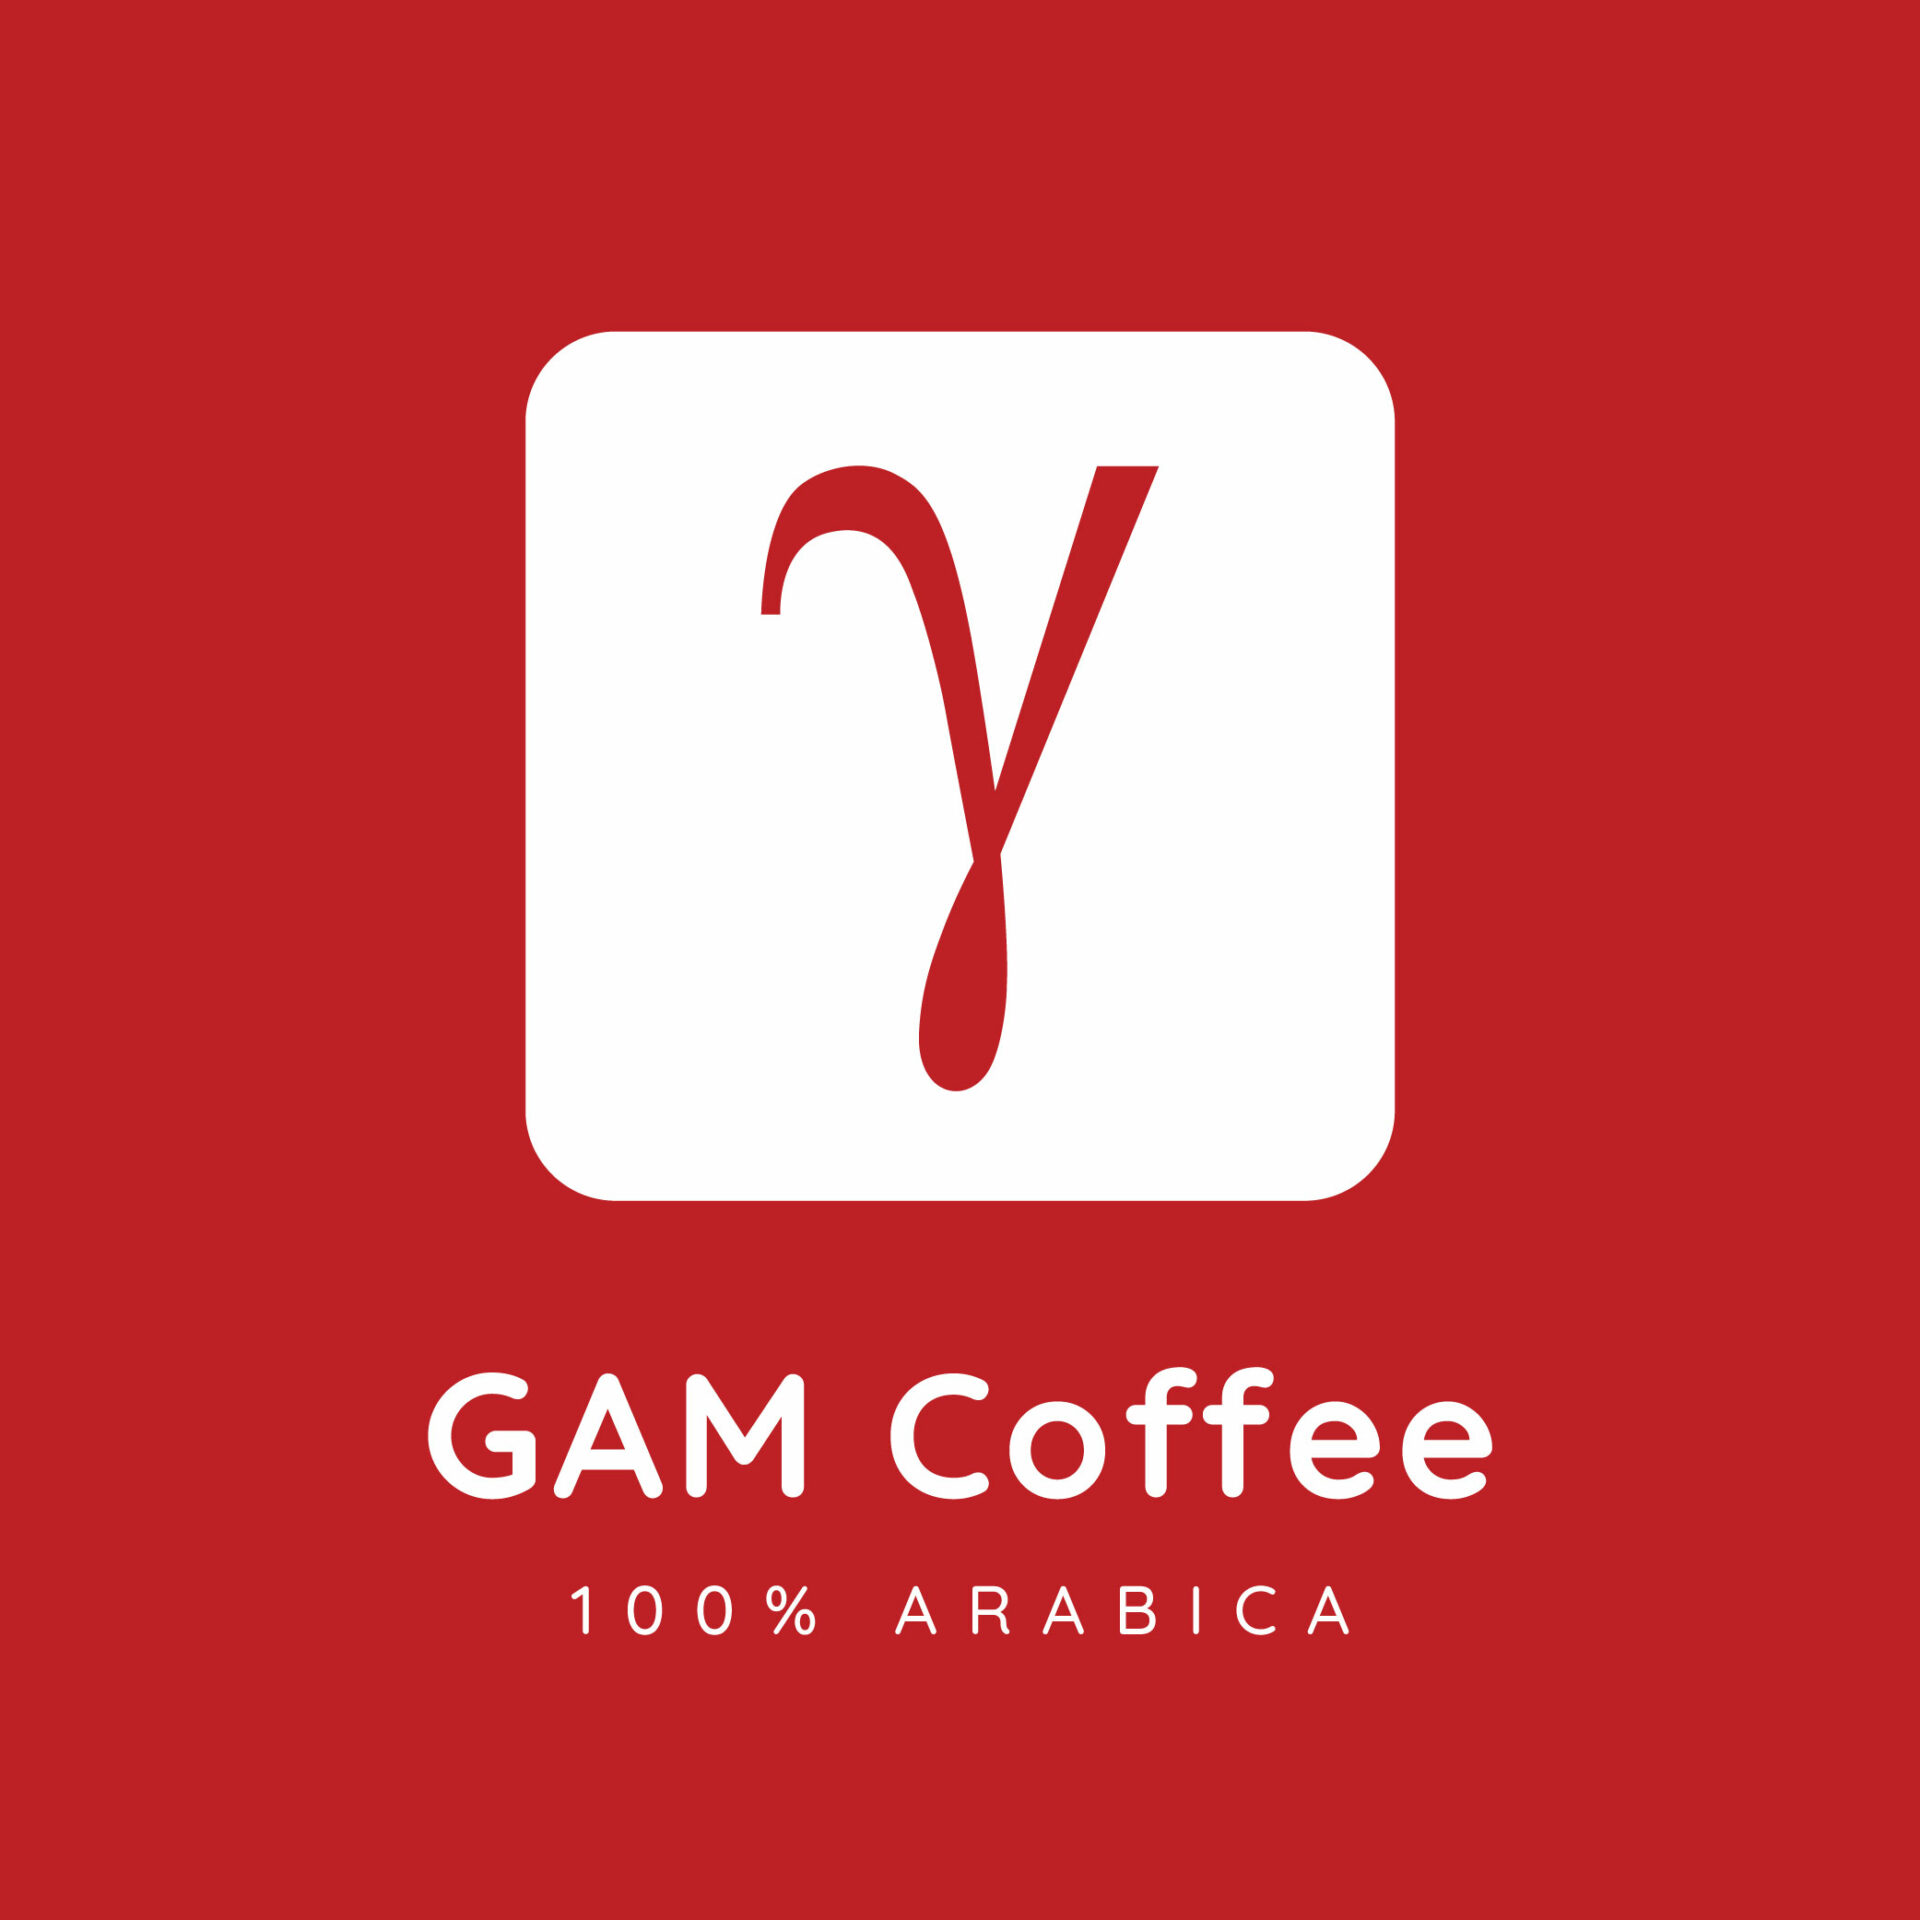 GAM Coffee logo 02 scaled